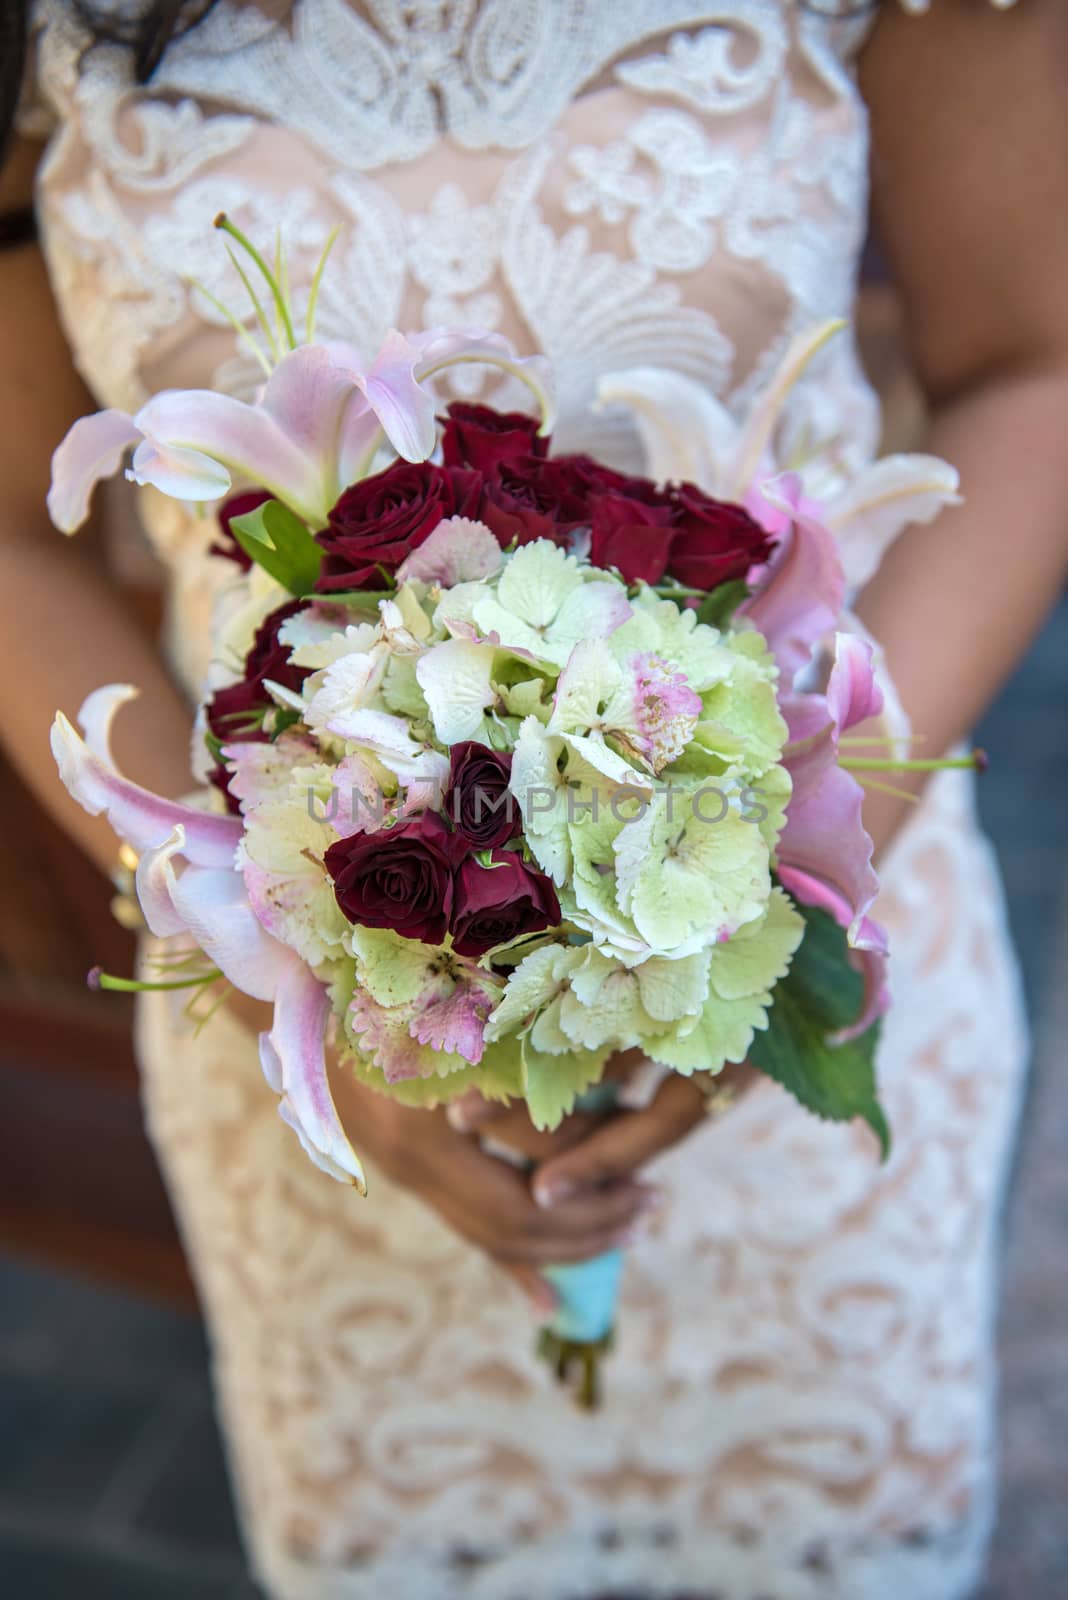 Closeup Image of a bride holding a bouquet